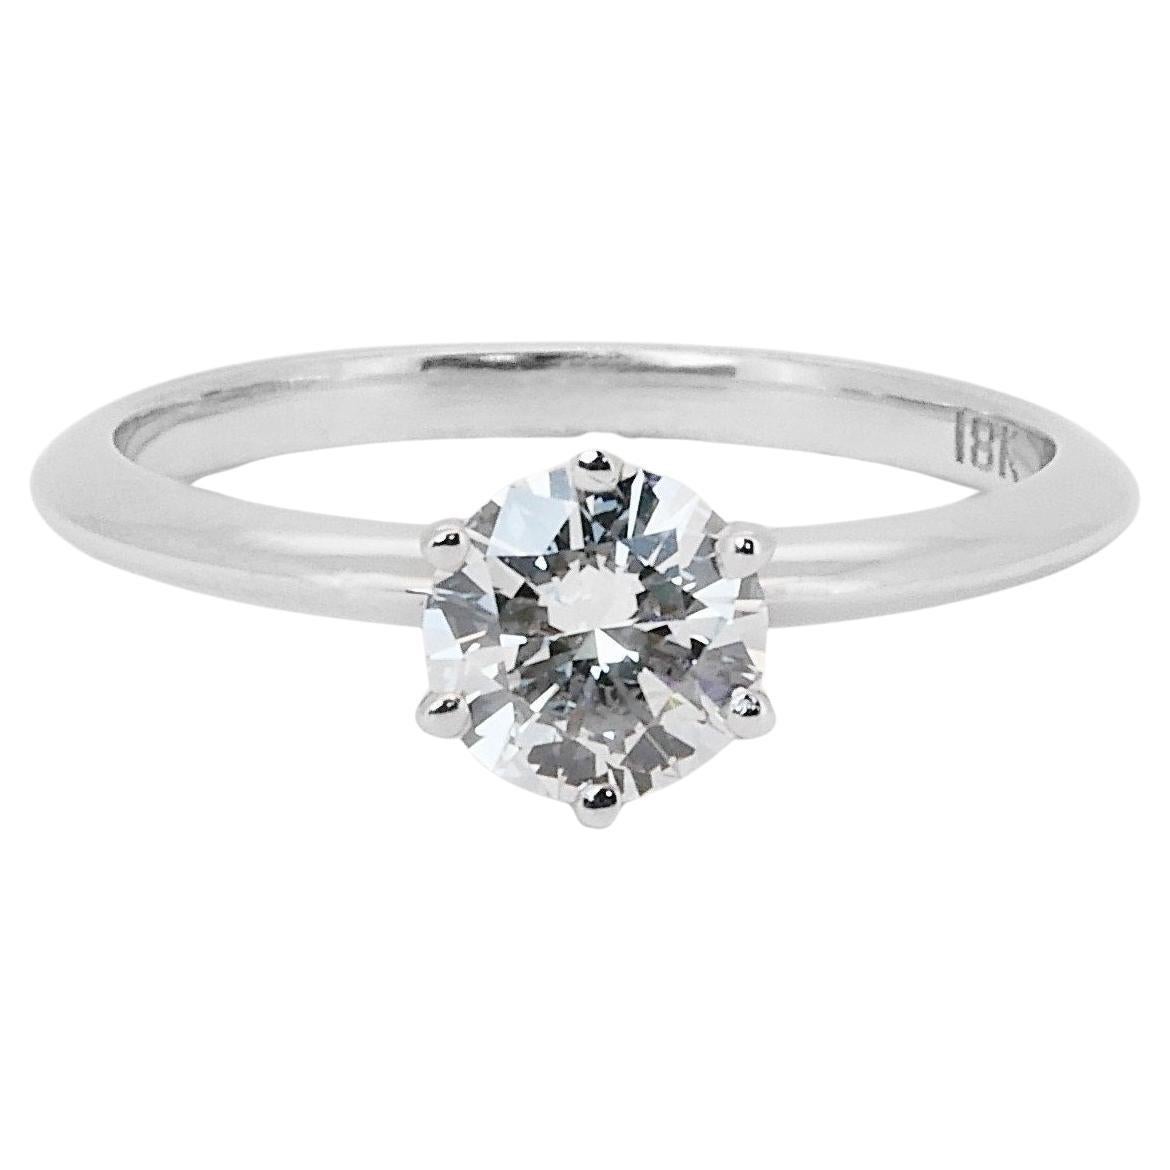 Dazzling 18k White Gold 1.03 Carat Round Brilliant Diamond Ring